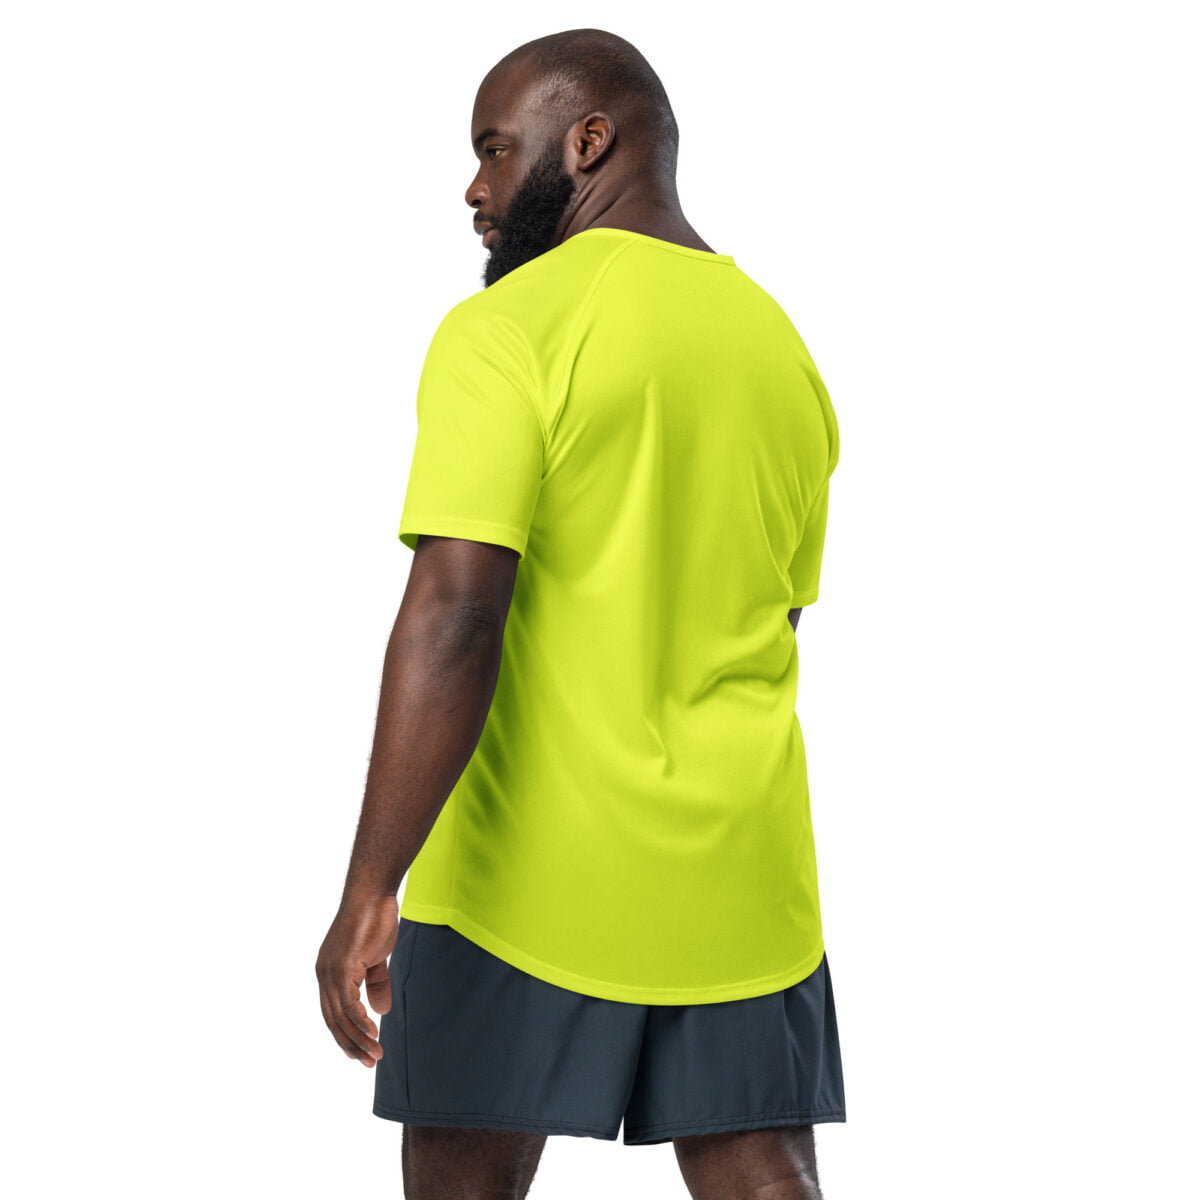 unisex sports jersey neon yellow back 65bb243c1a53a herren sport trikot